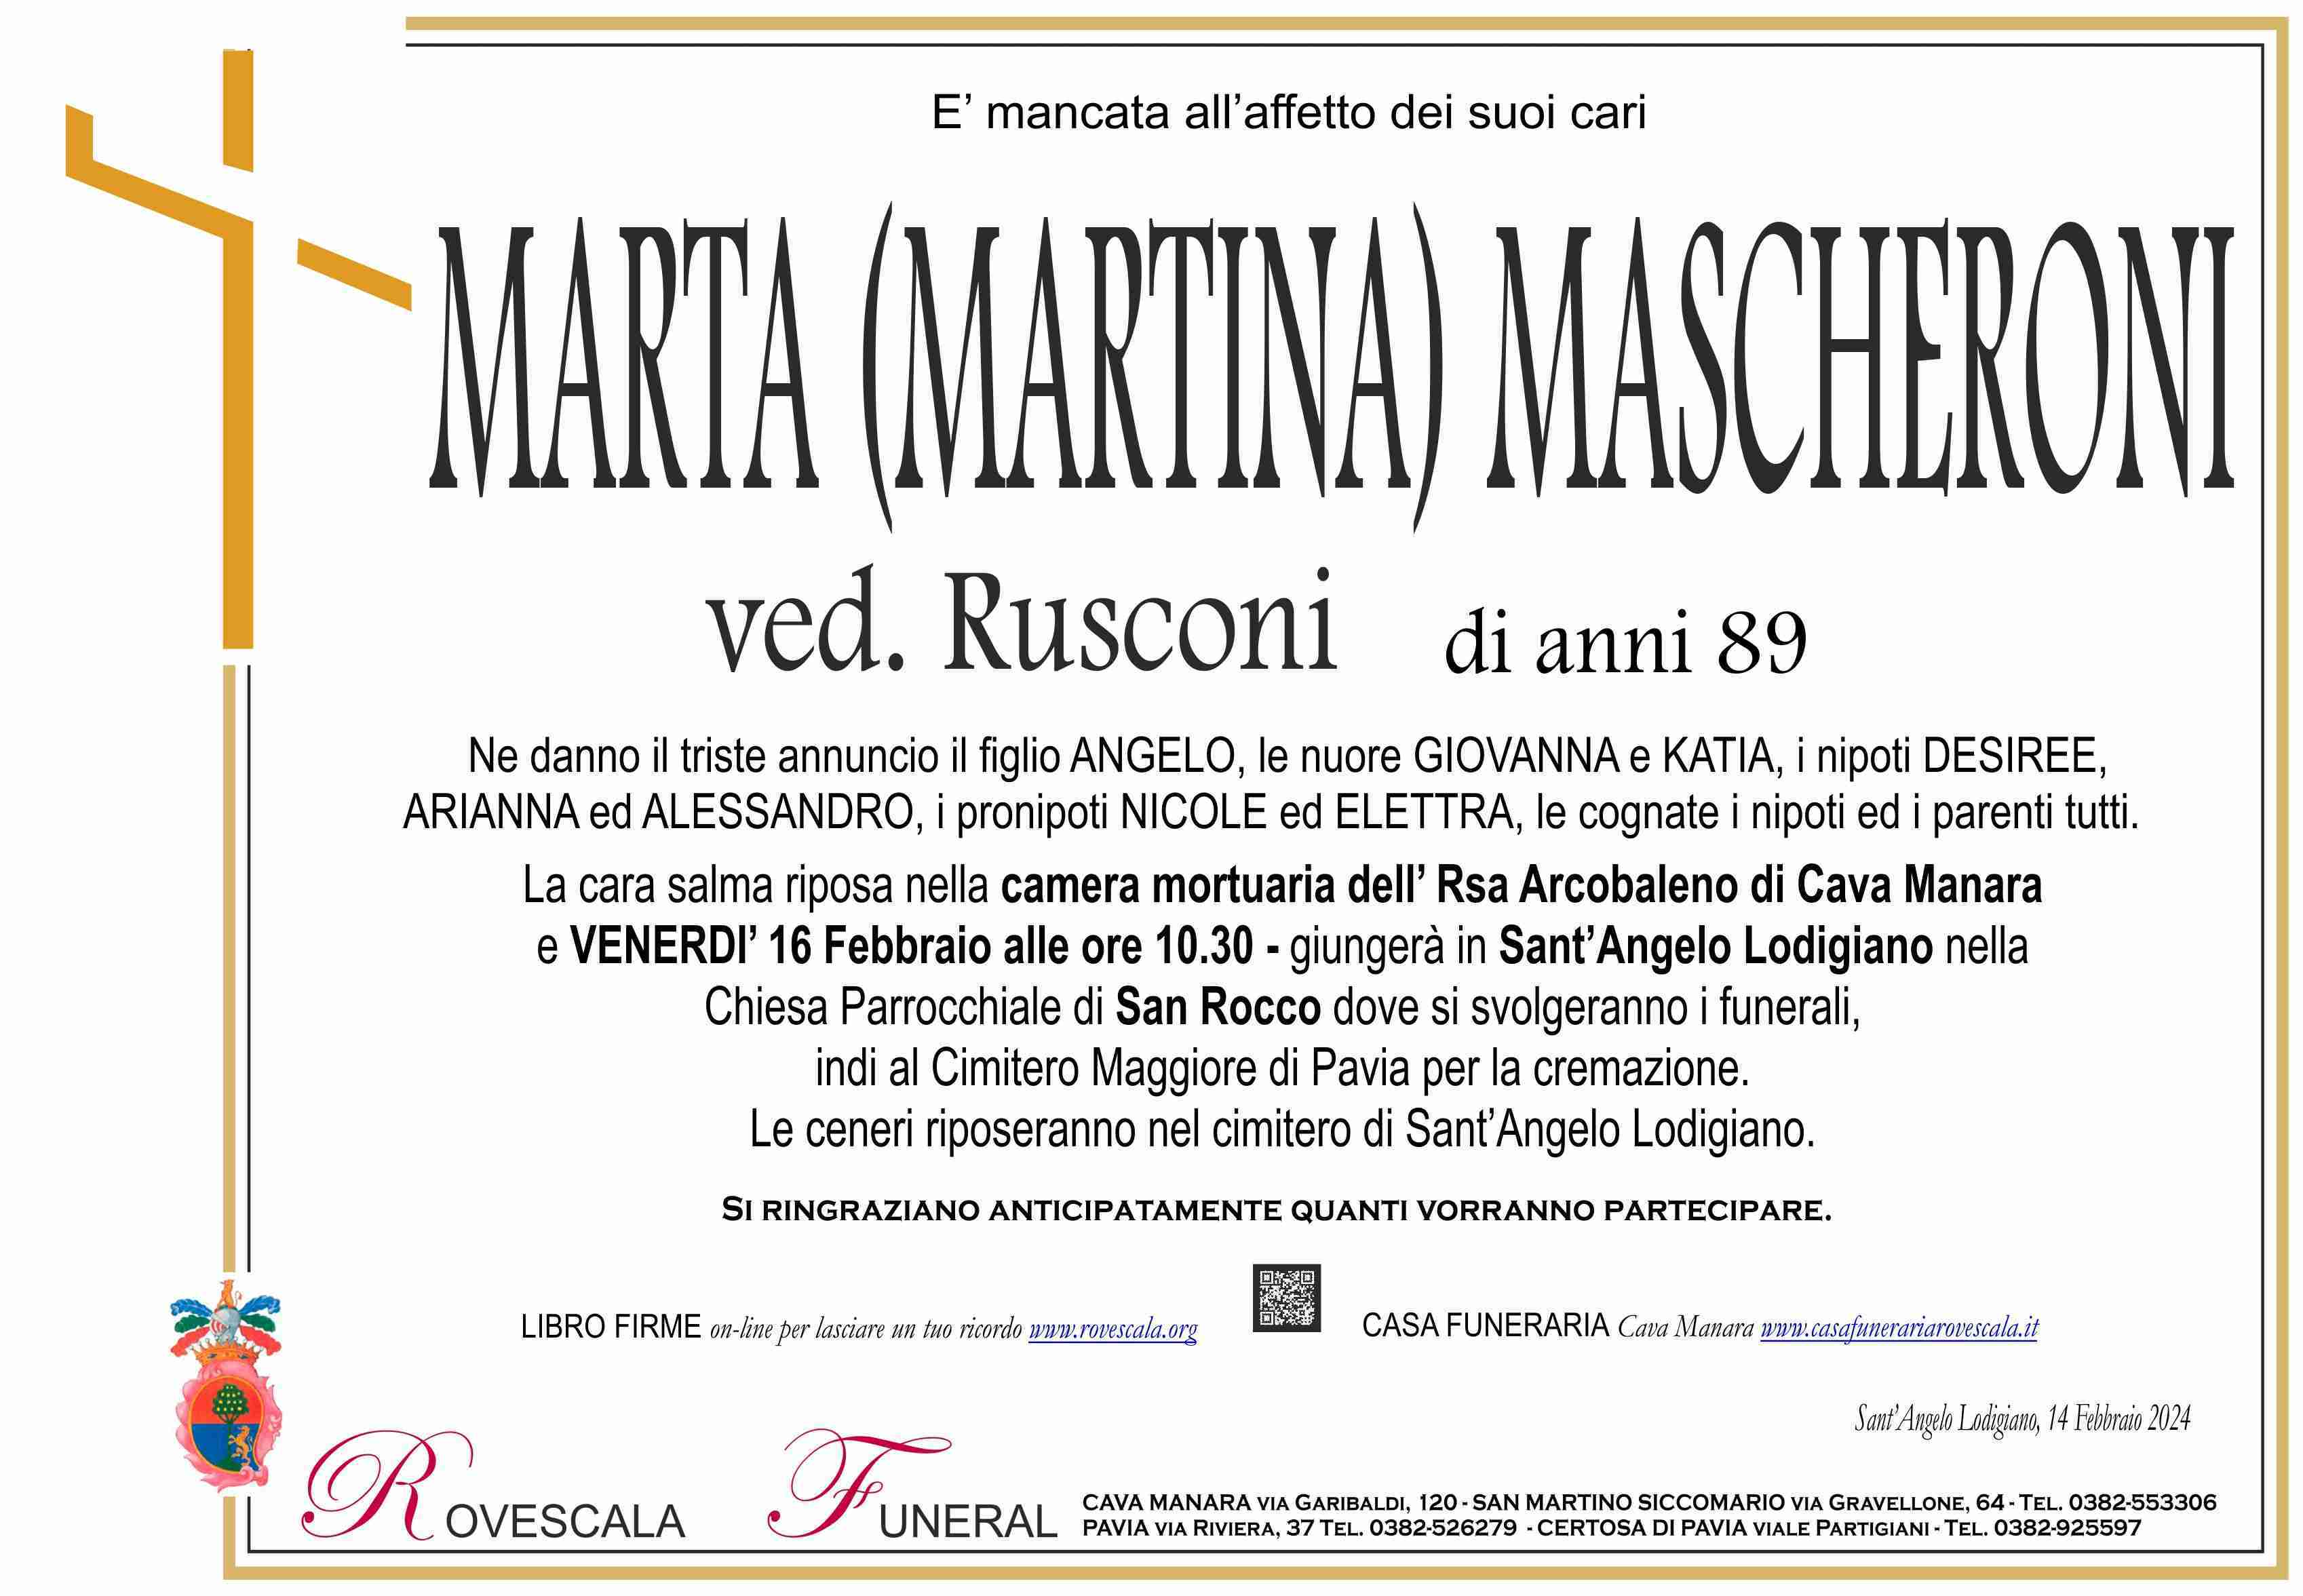 Marta Mascheroni